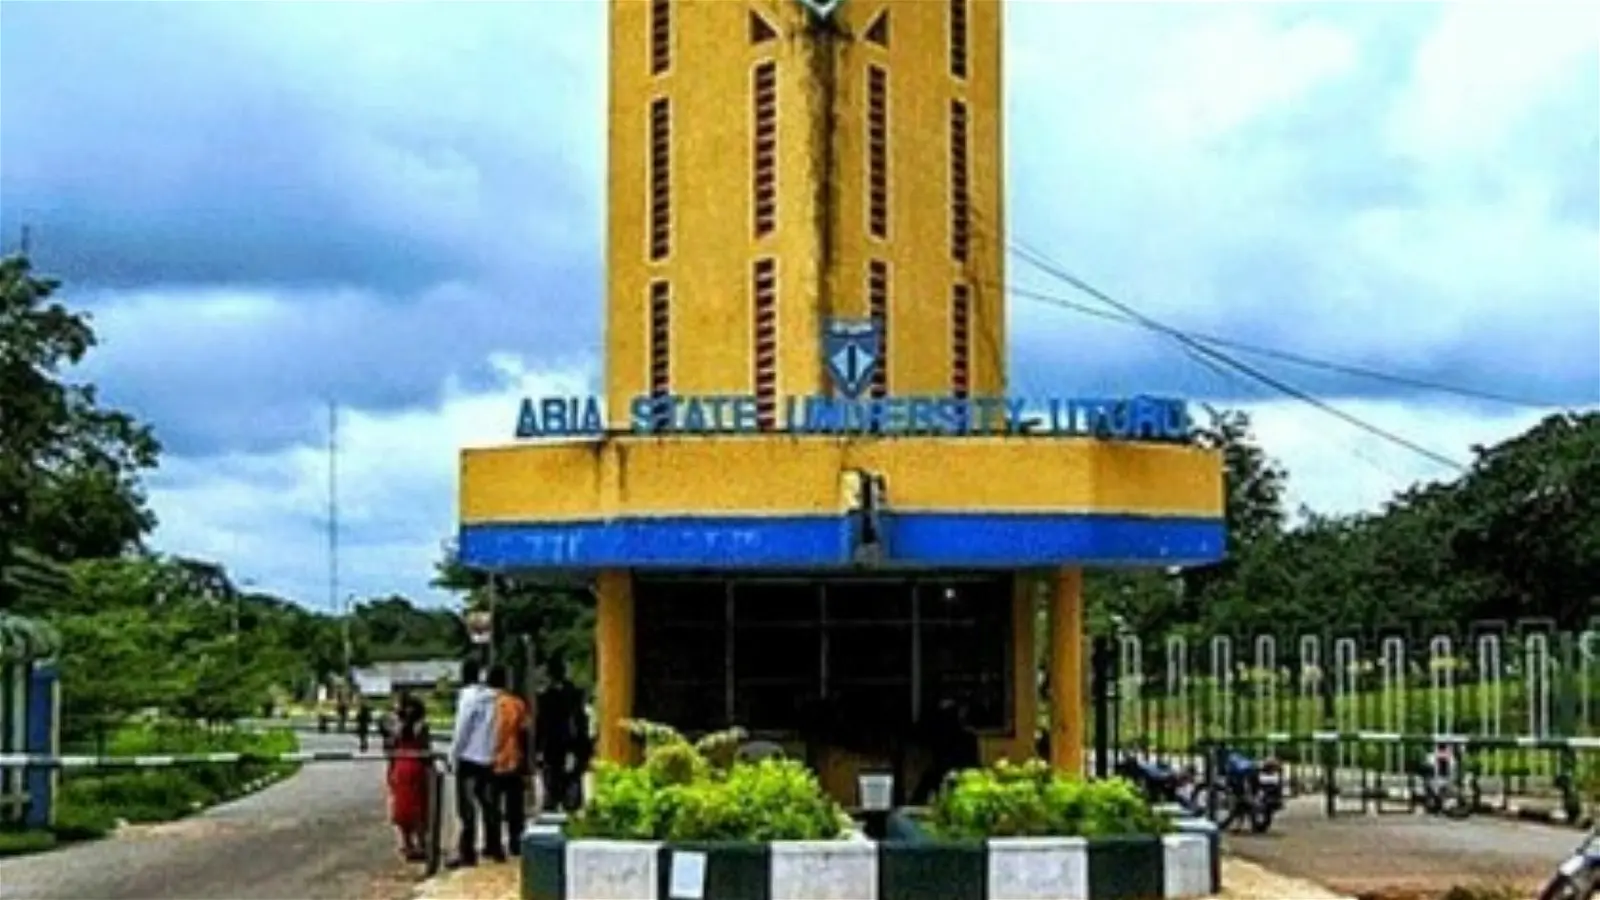 Abia State University (ABSU), Nigeria